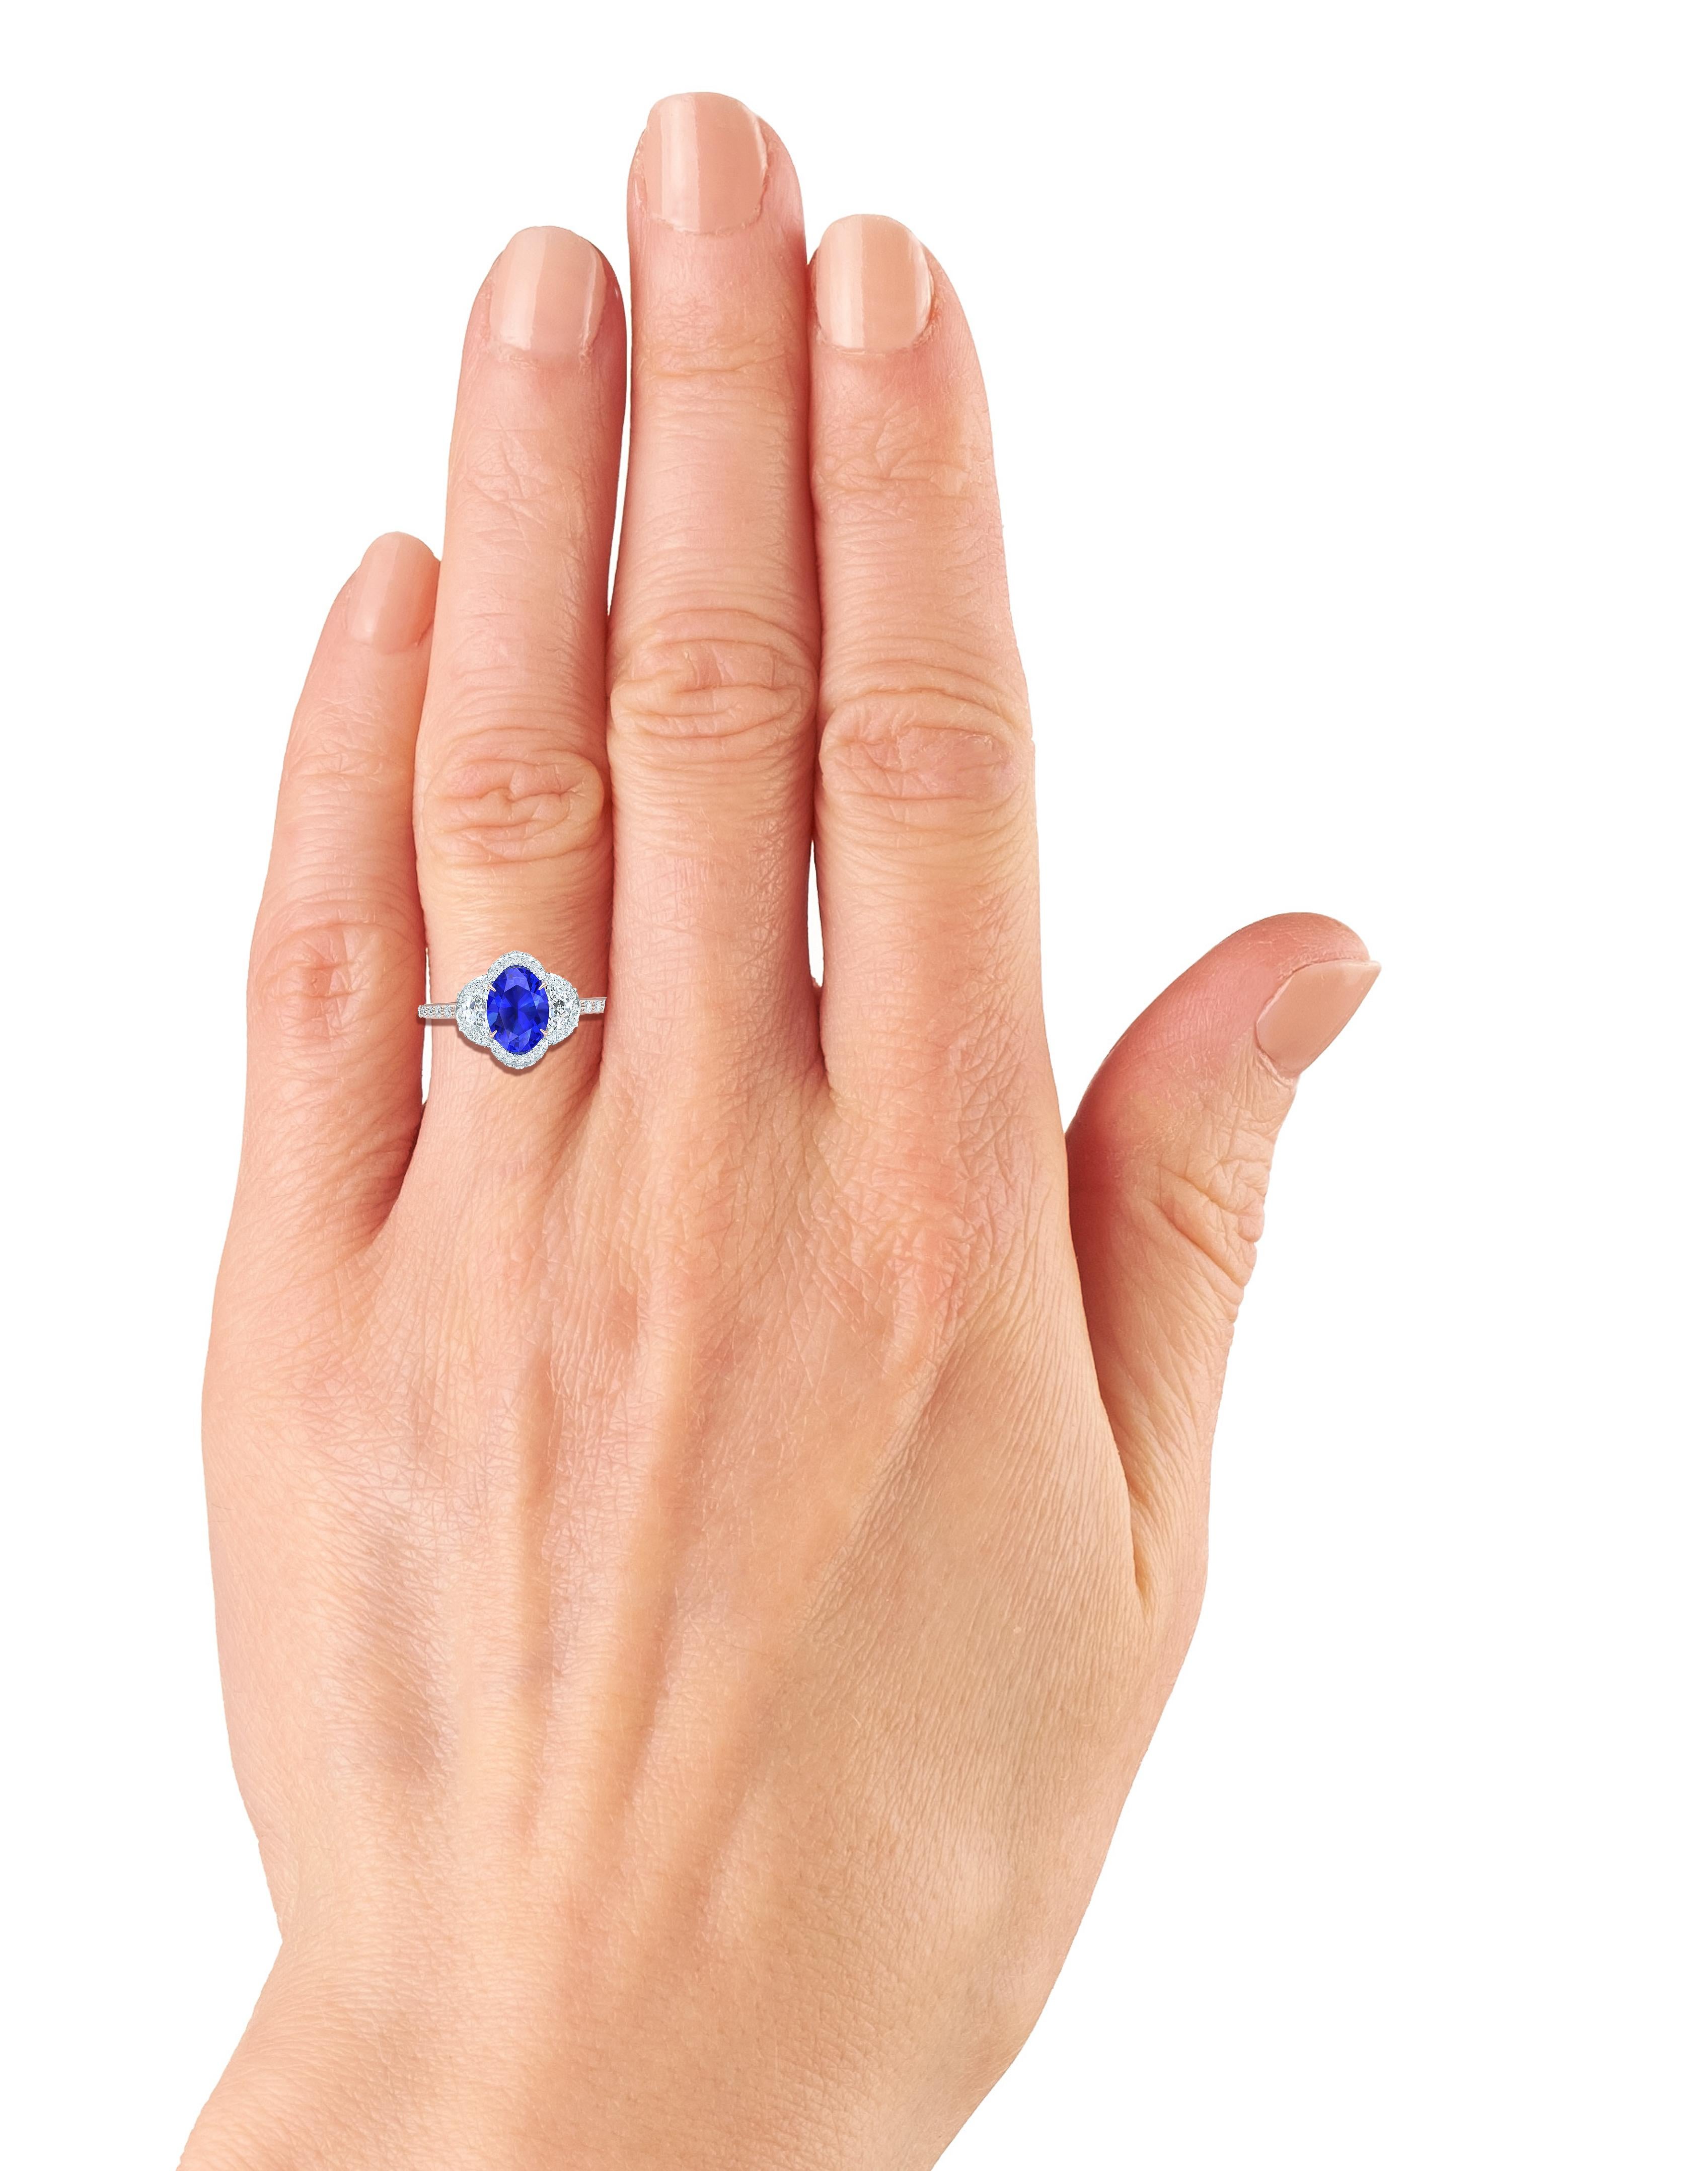 3 carat sapphire engagement ring